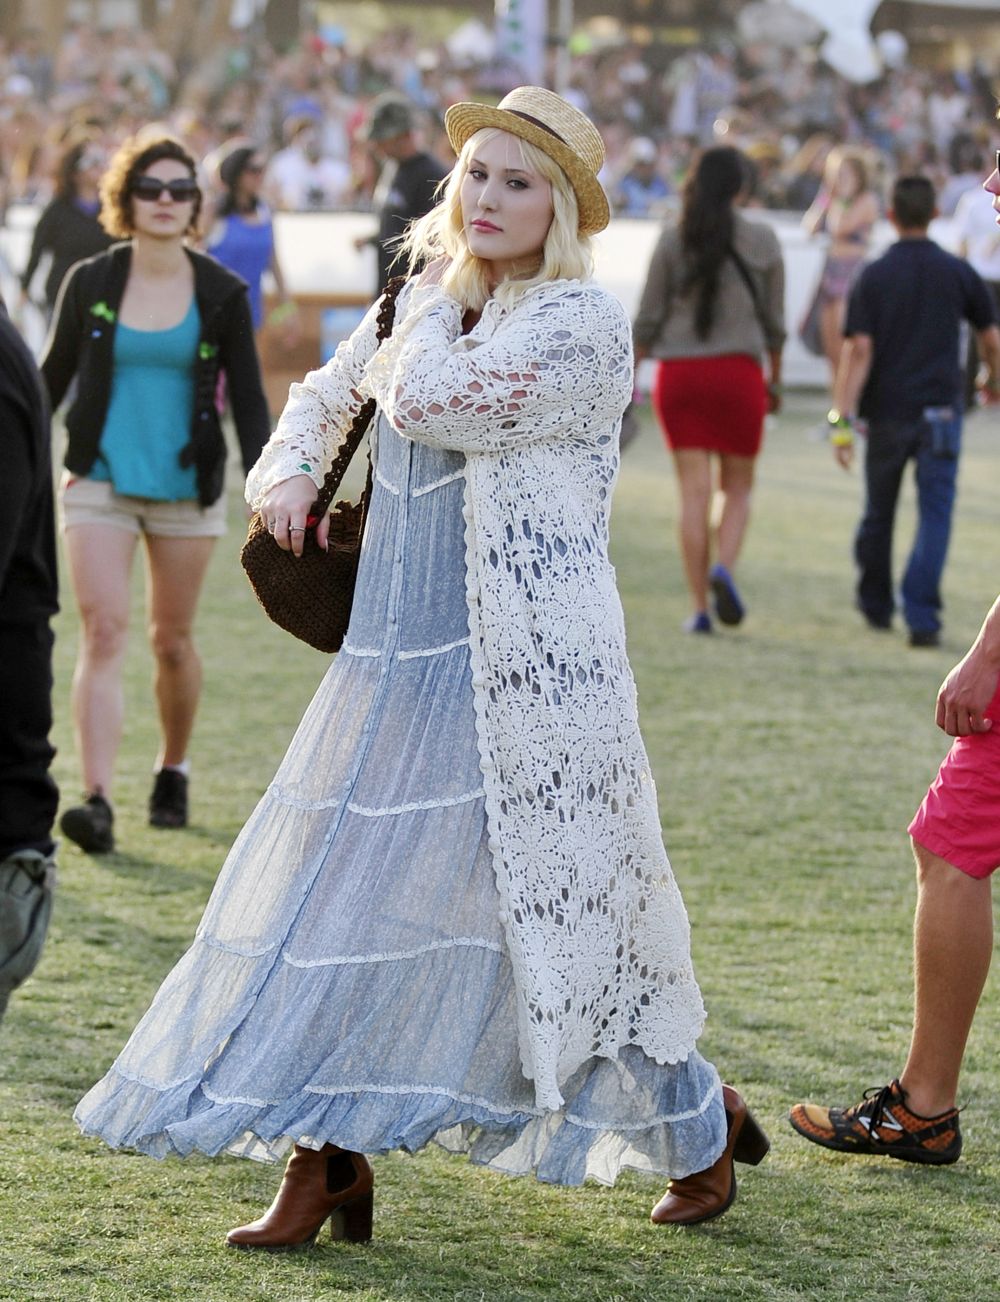 Hayley Amber Hasselhoff à Coachella 2013